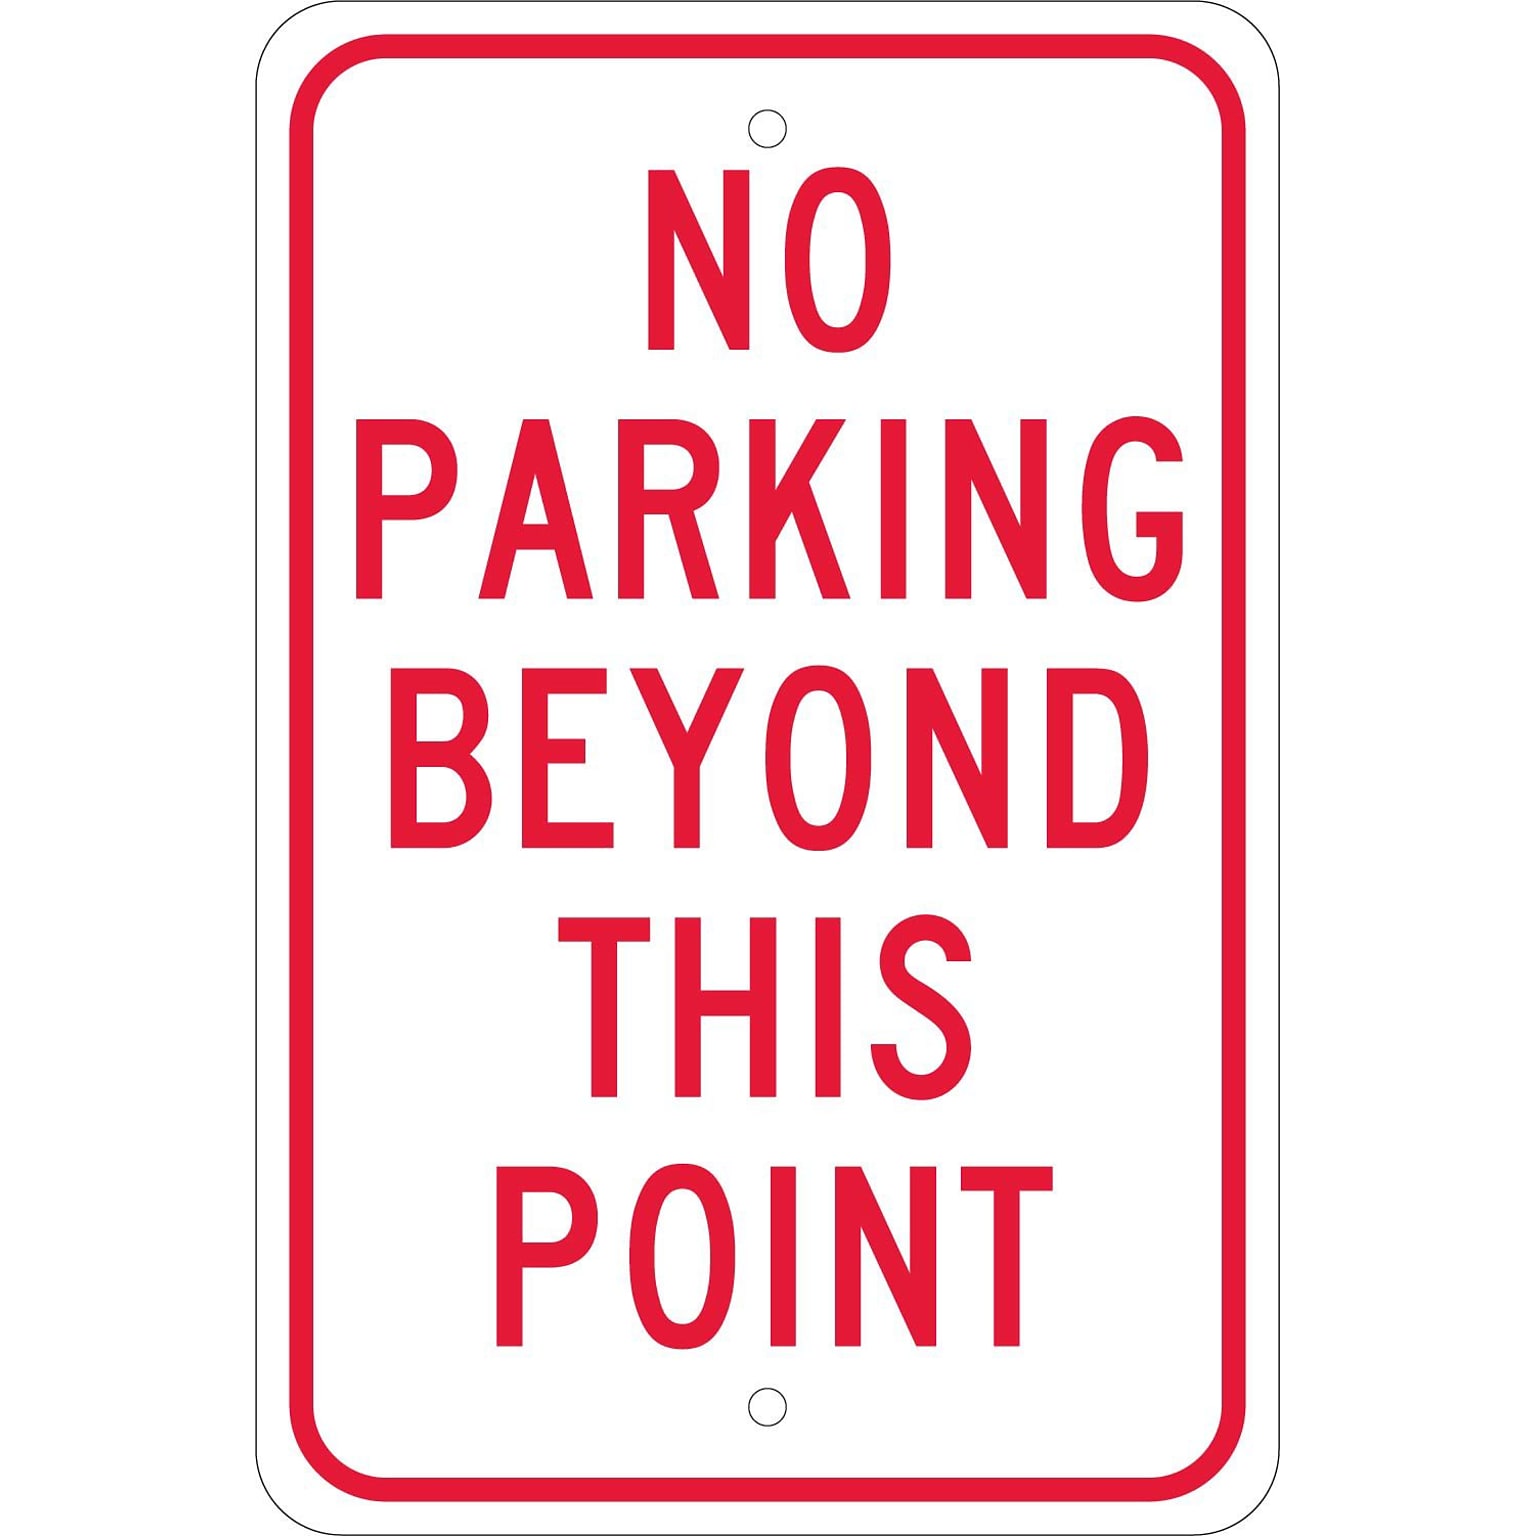 National Marker Reflective No Parking Beyond This Point Parking Sign, 18 x 12, Aluminum (TM26J)